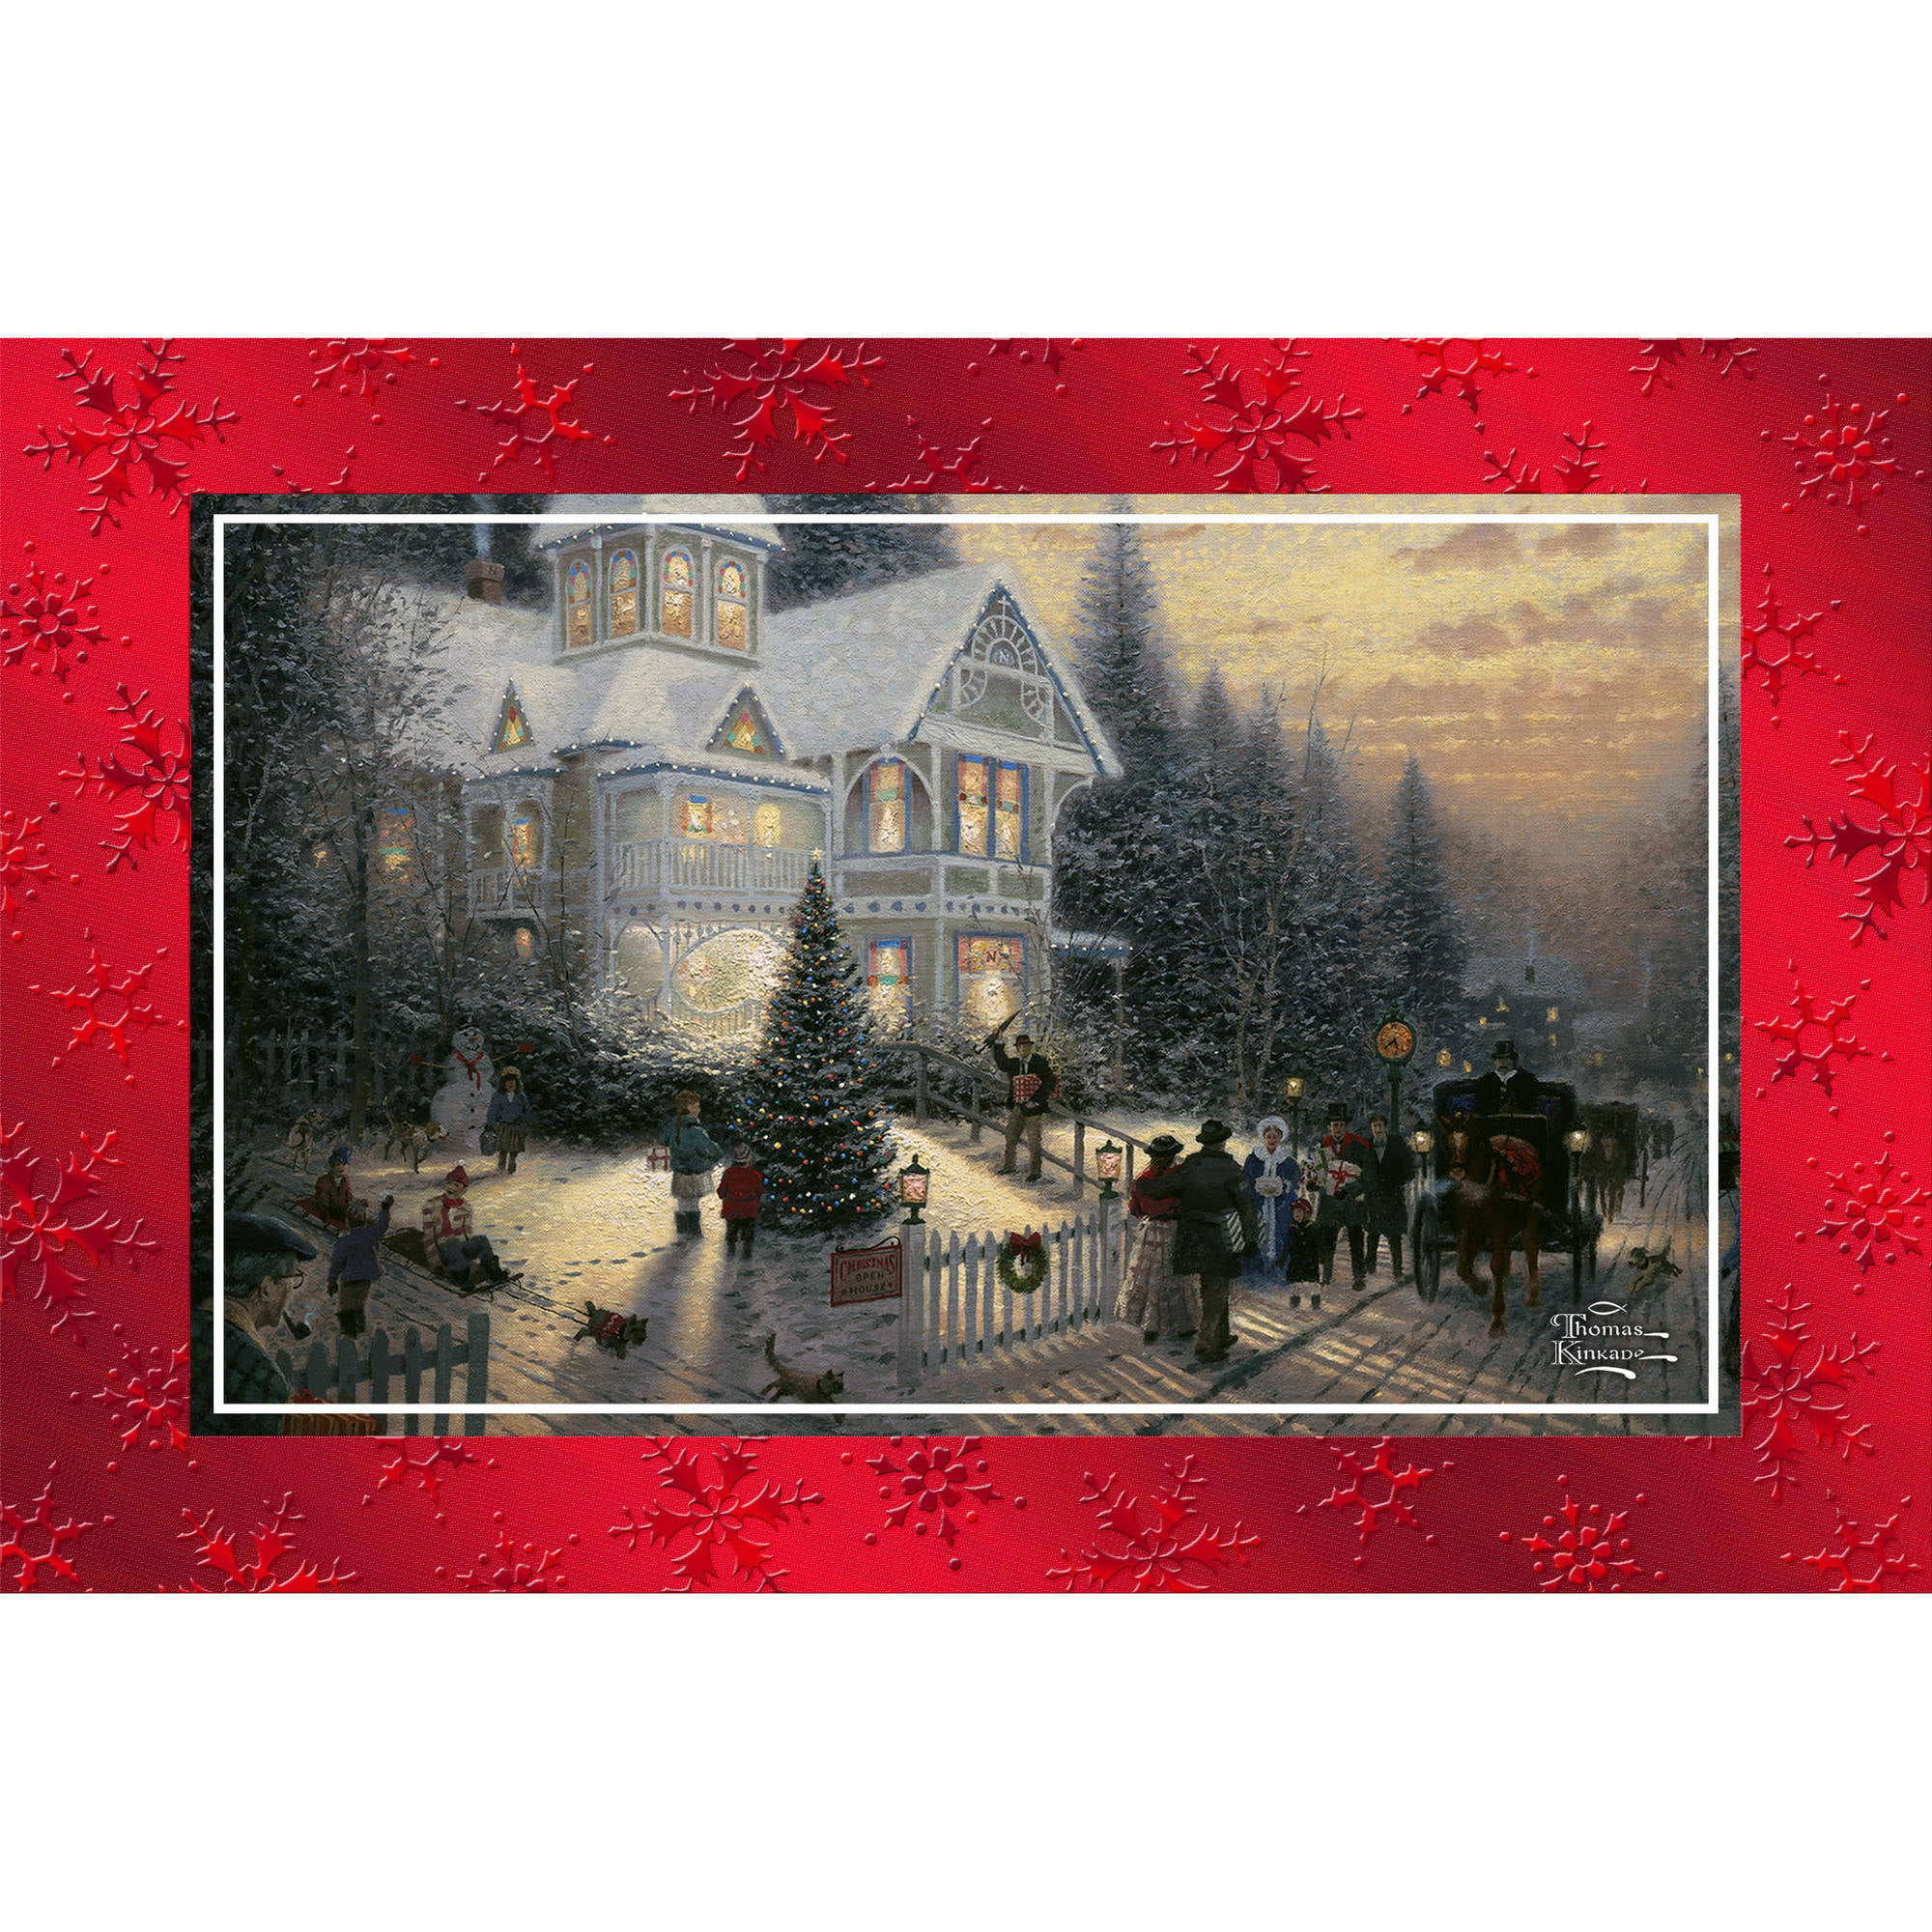 DaySpring Traditional Boxed Christmas Cards, Thomas Kinkade Red House, 24pk - Walmart.com ...